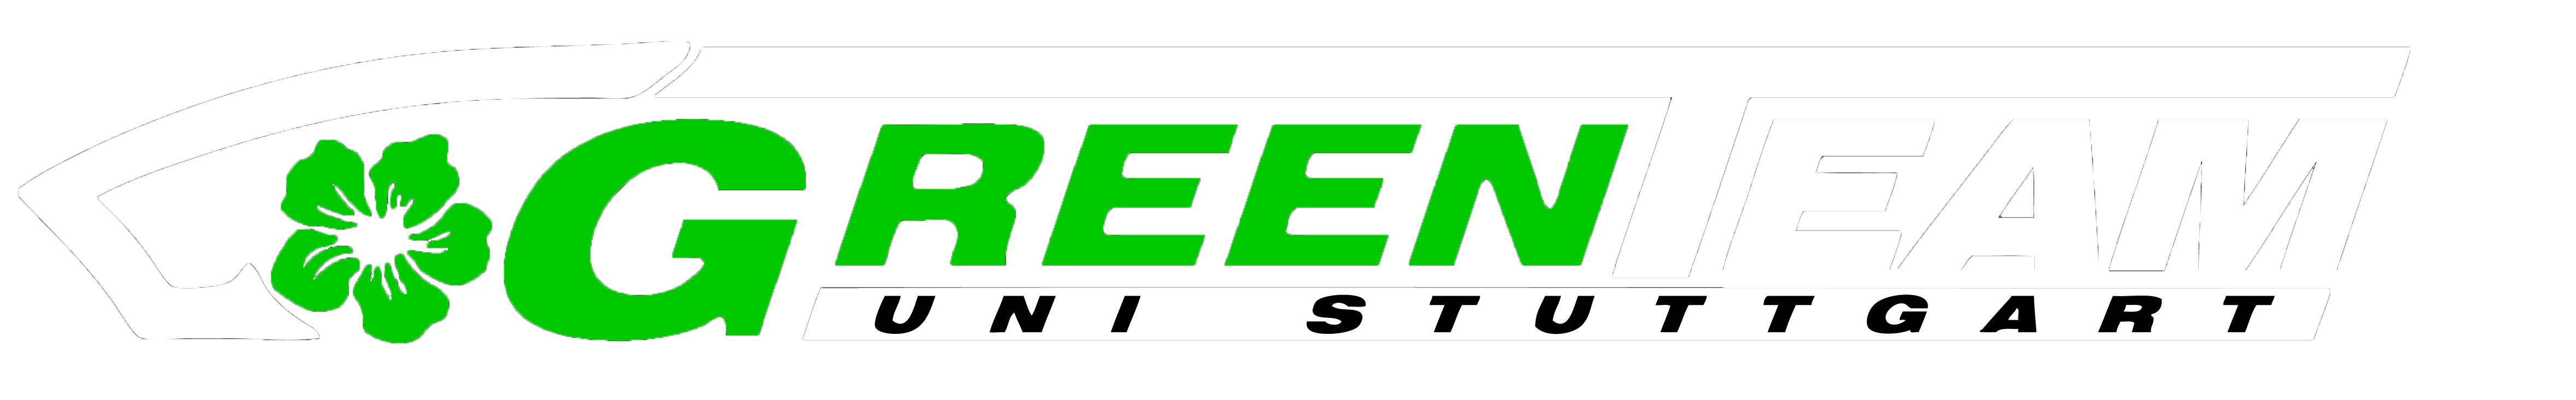 Sponsoren GreenTeam